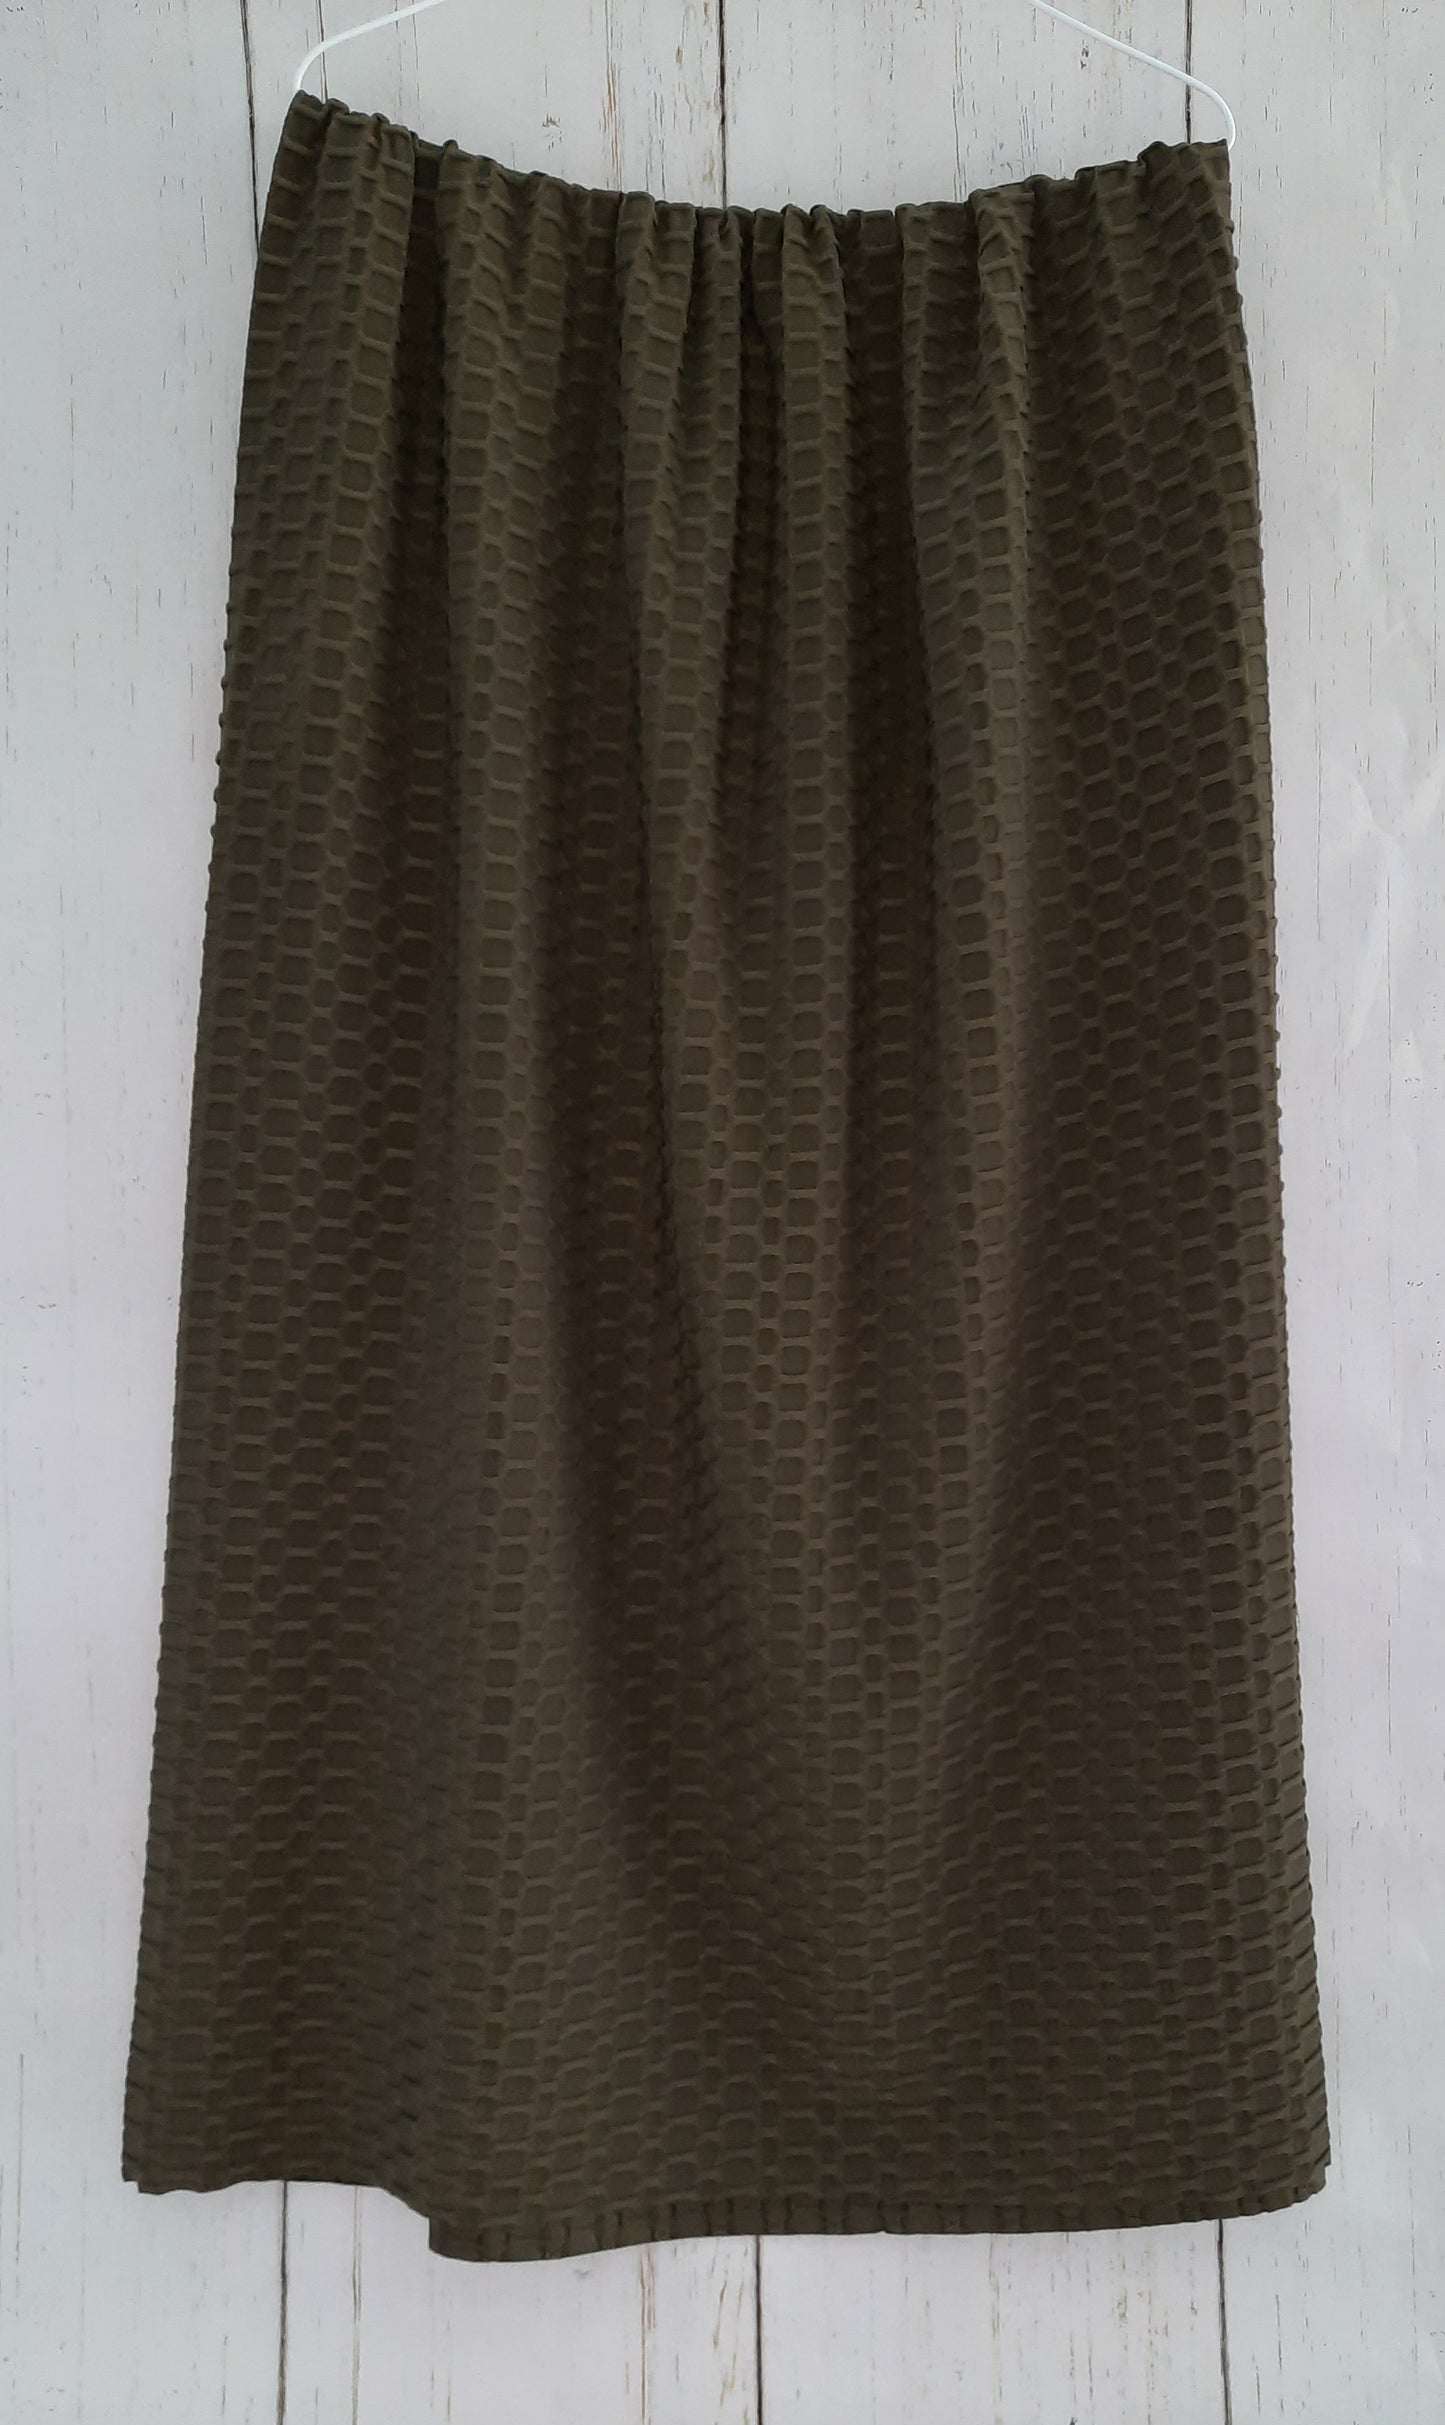 Polyester Honeycomb knit